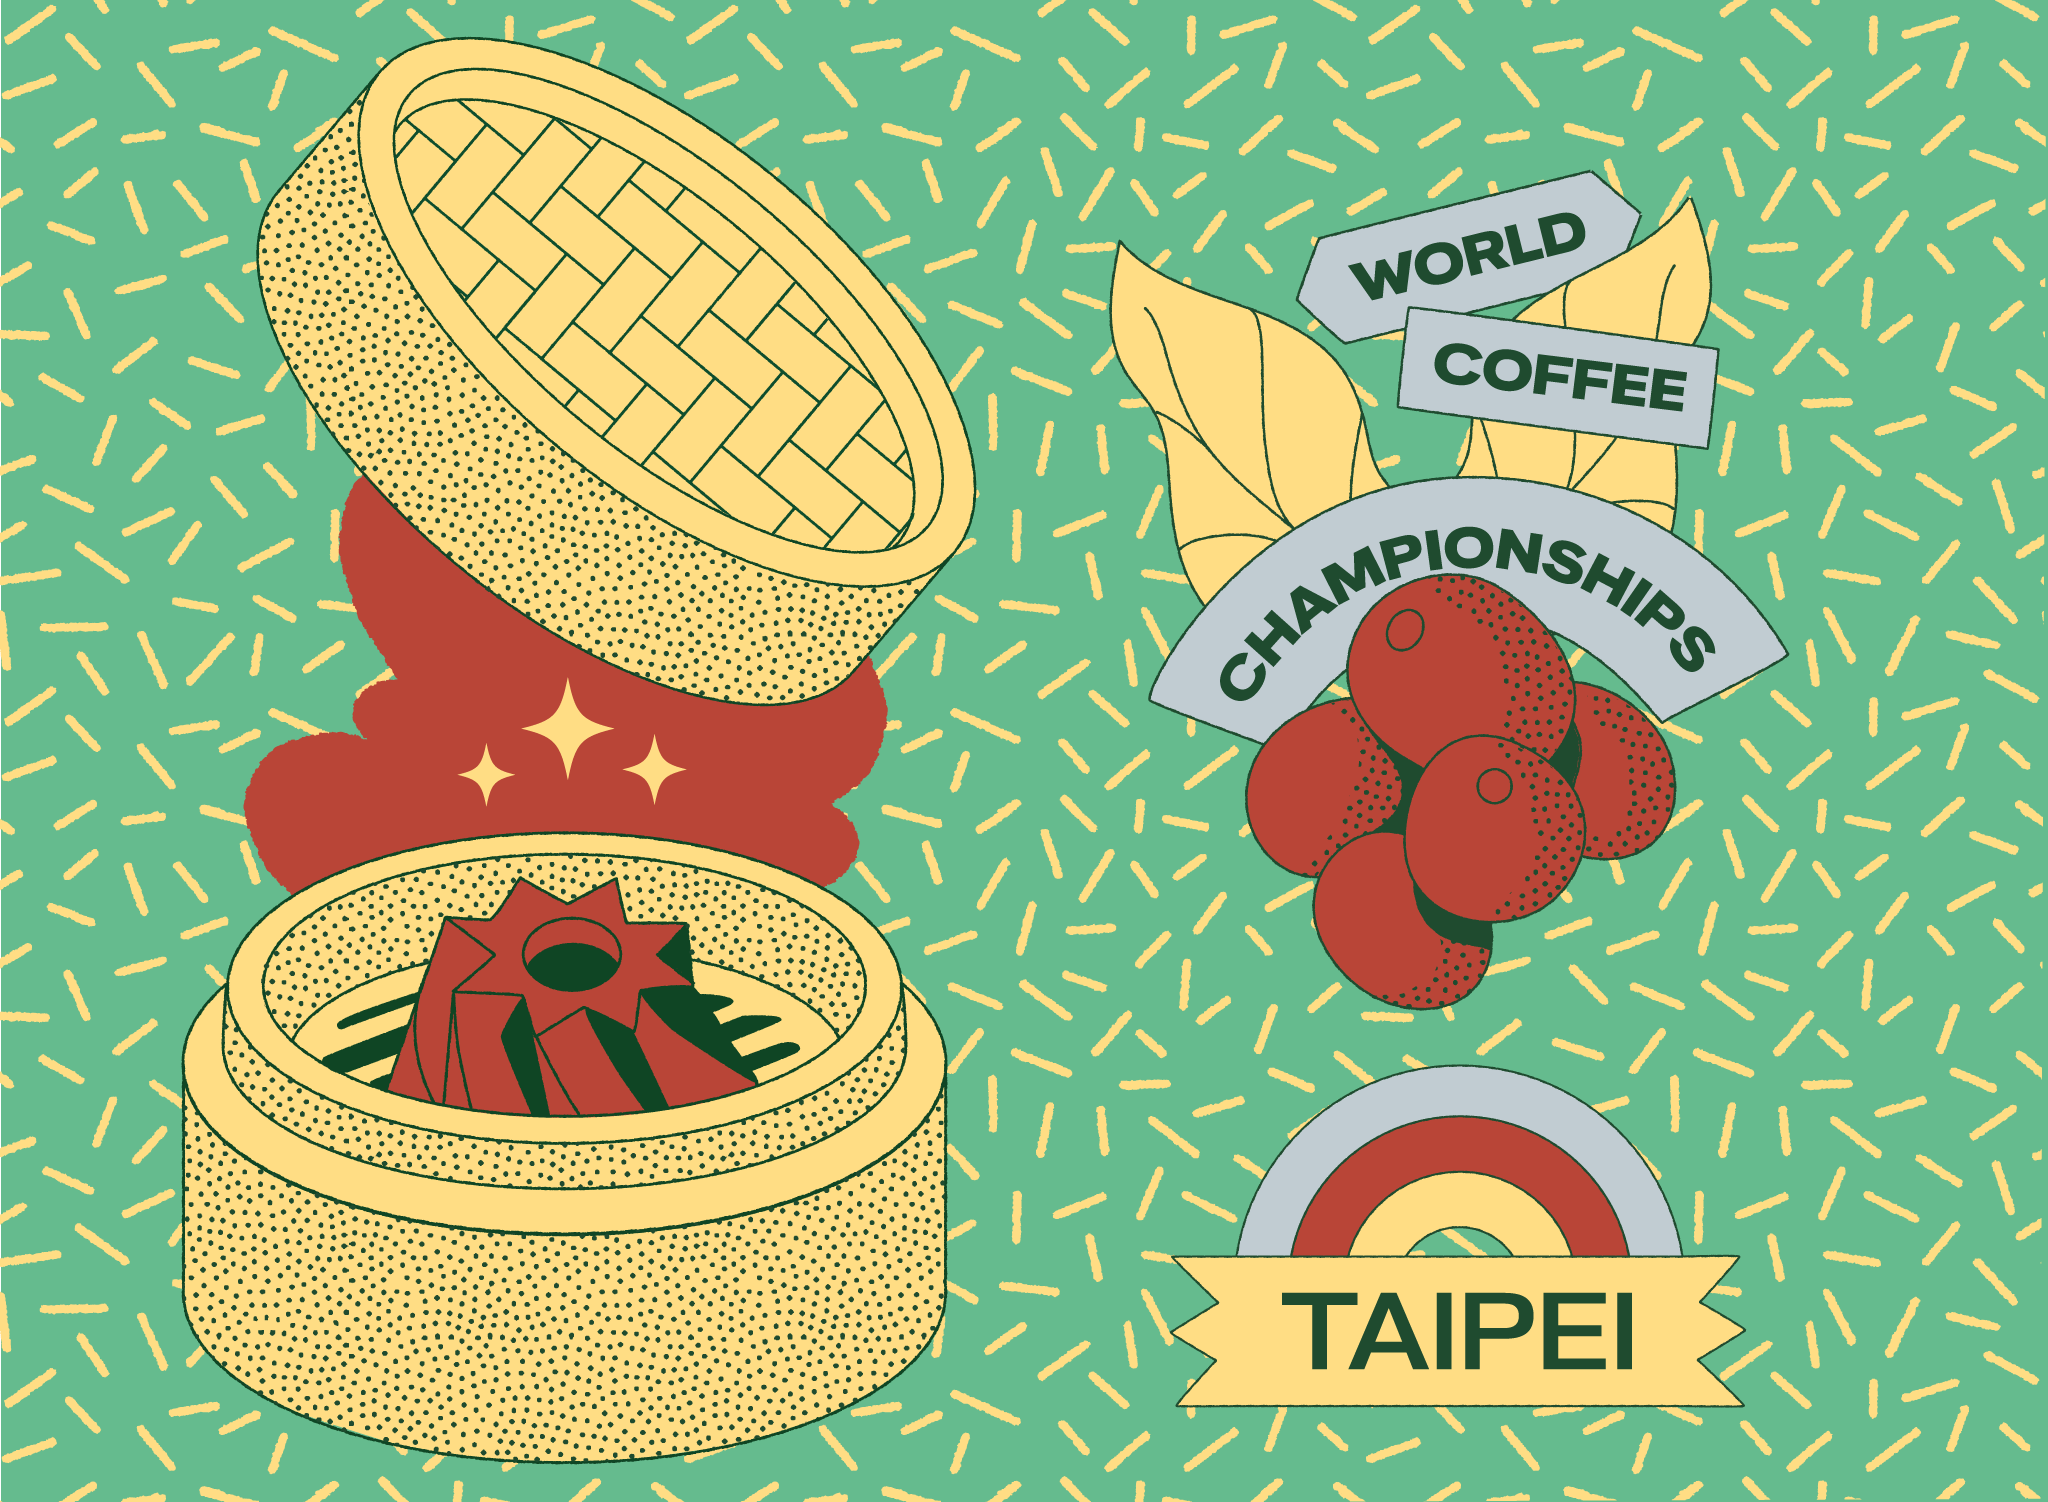 Taipei World Coffee Championships